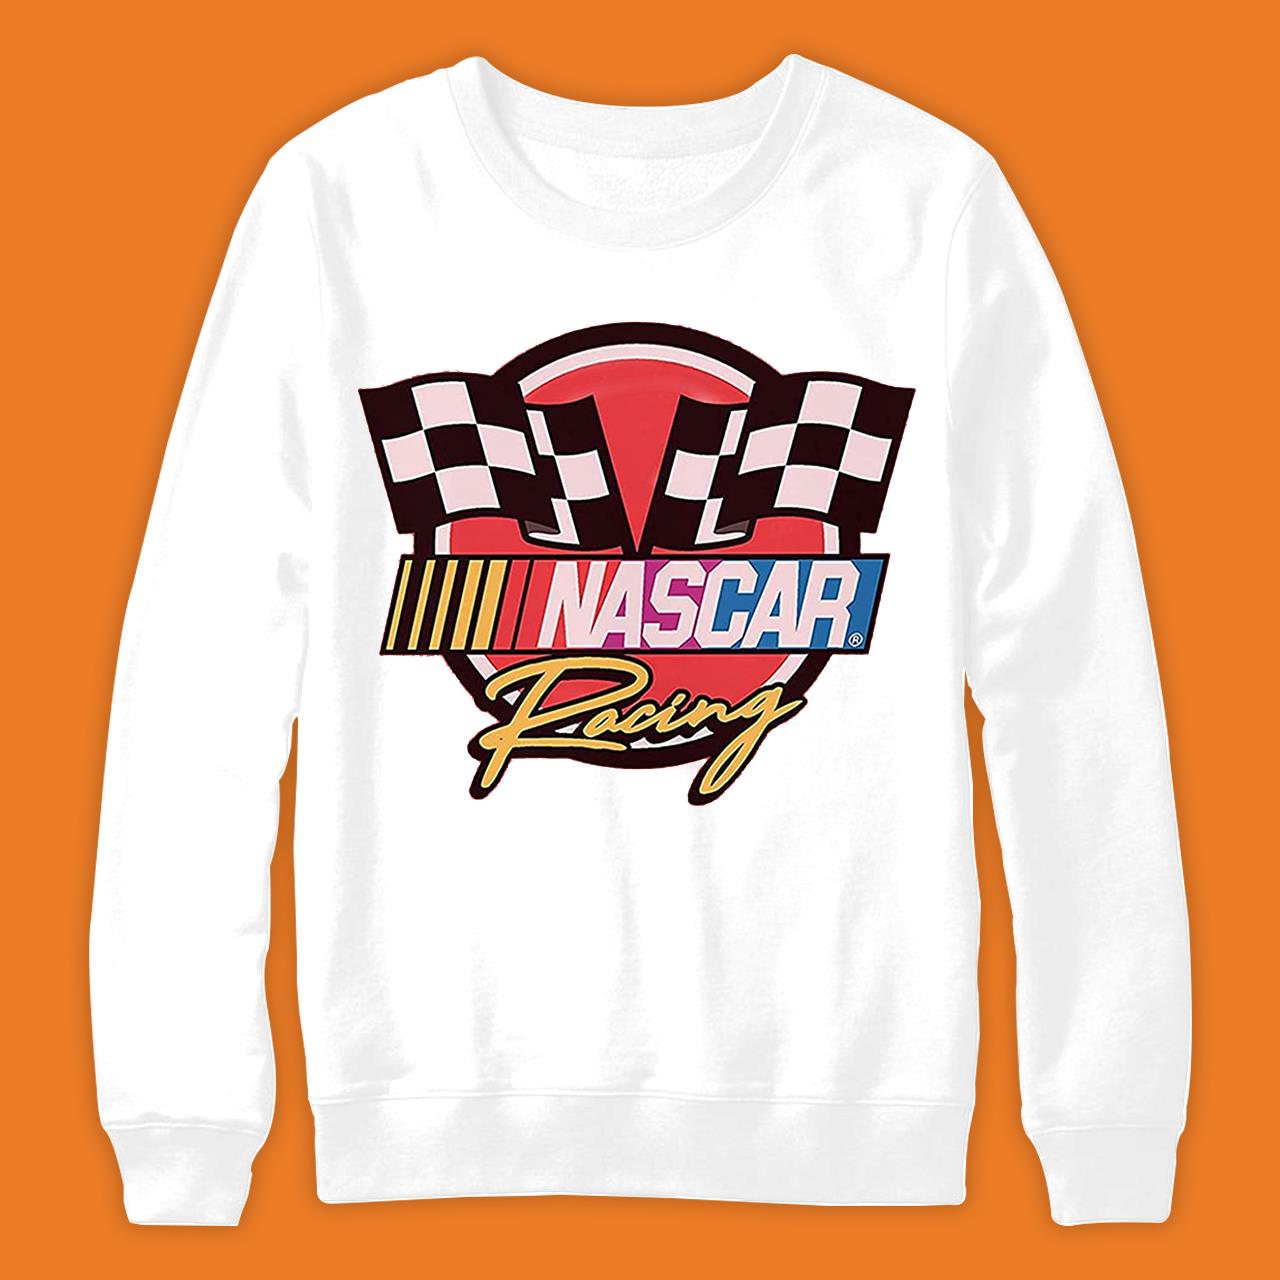 Nascar Vintage Daytona 500 Shirt Racing Graphic T-shirt